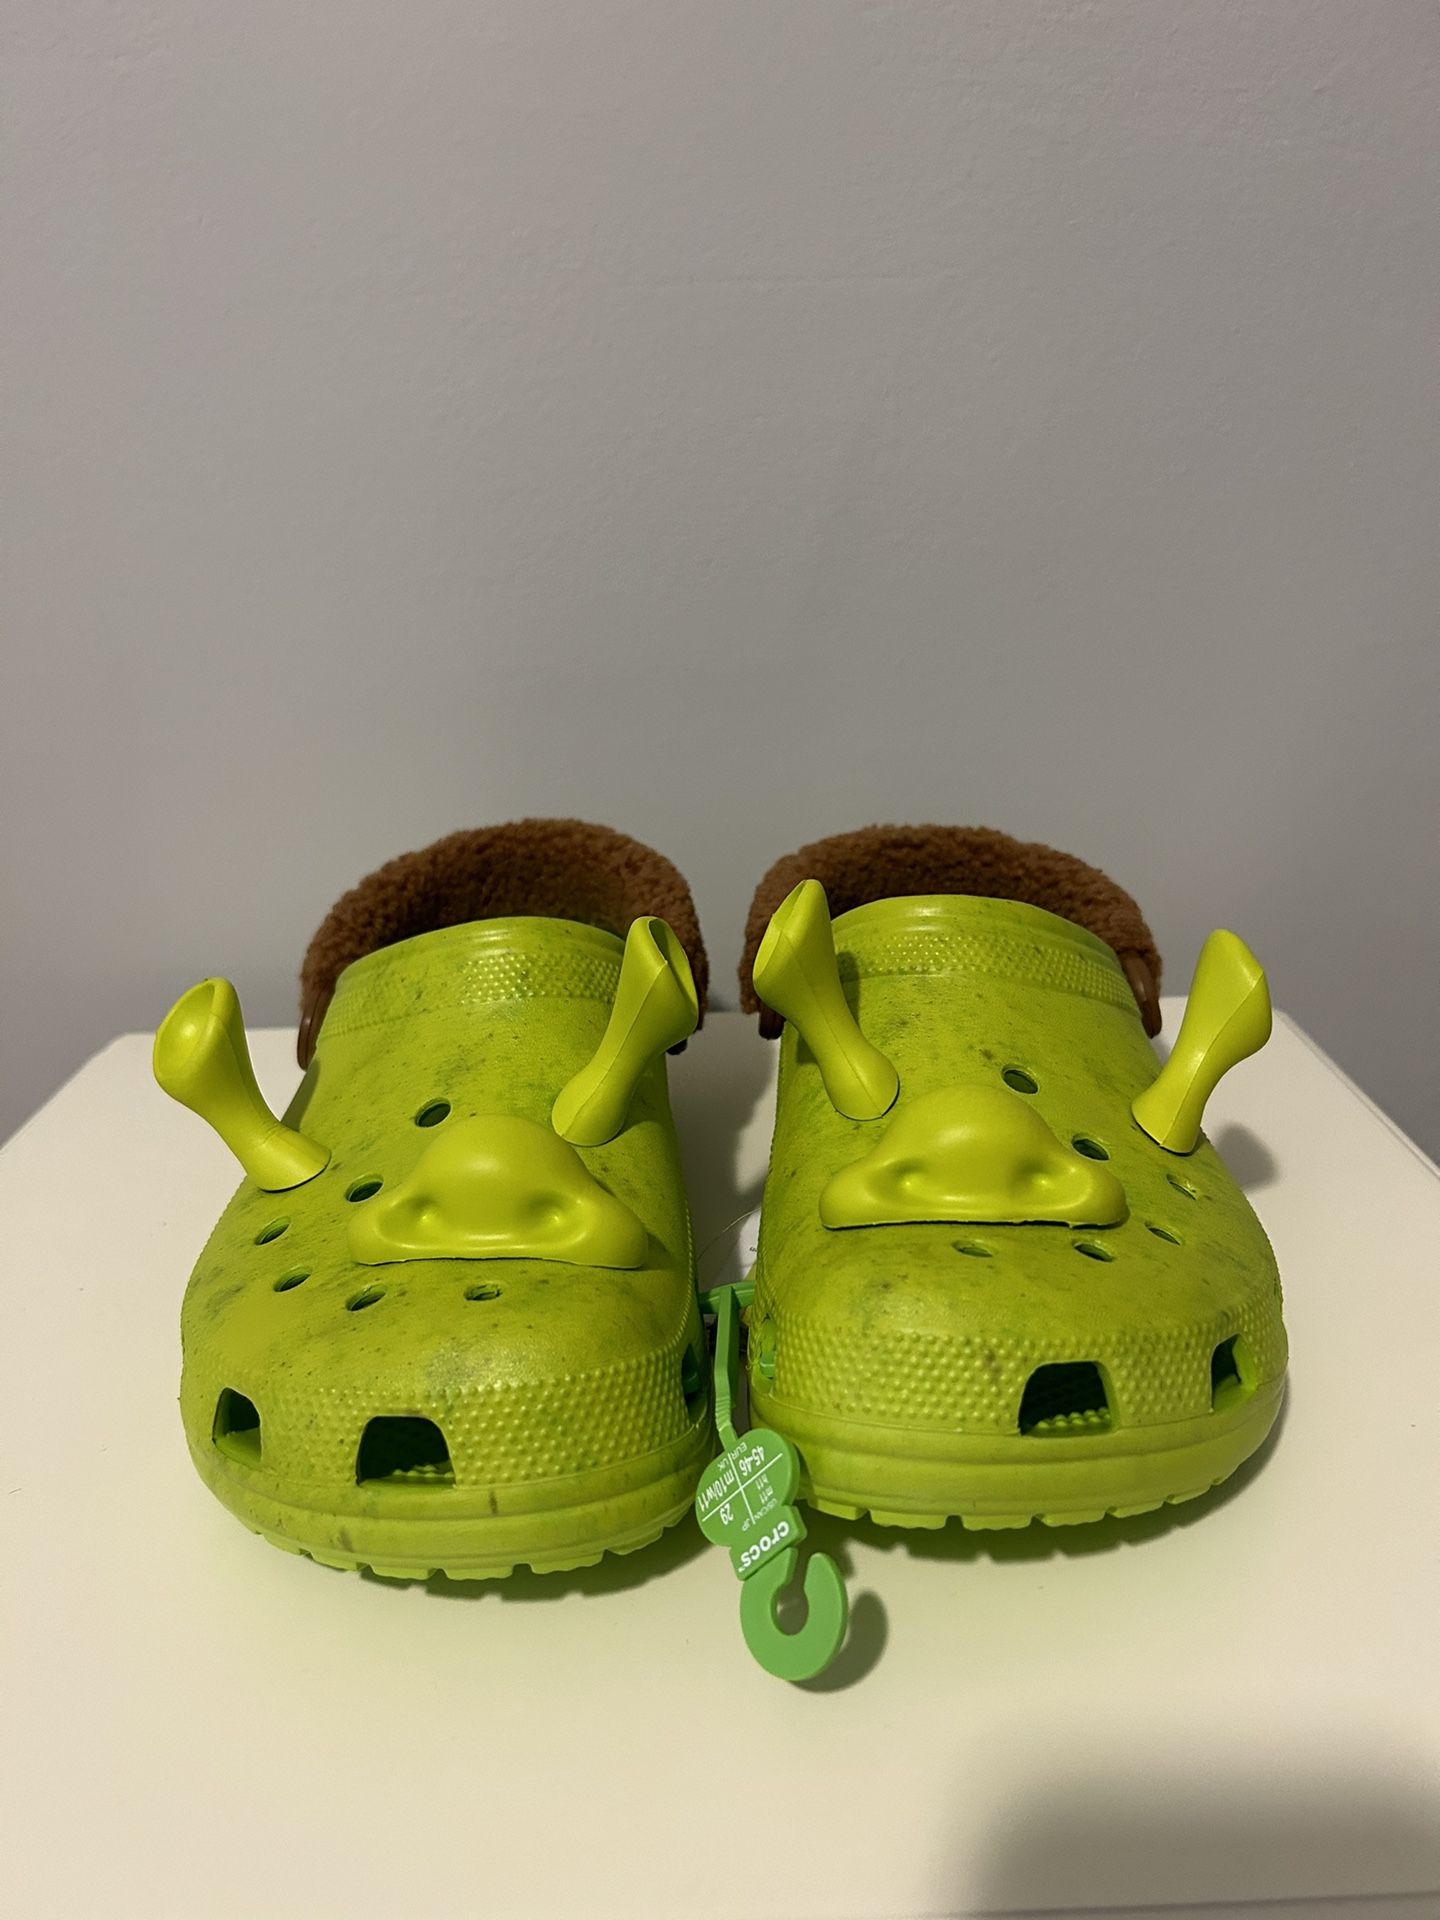 Shrek Dreamworks Crocs Size 10 Mens